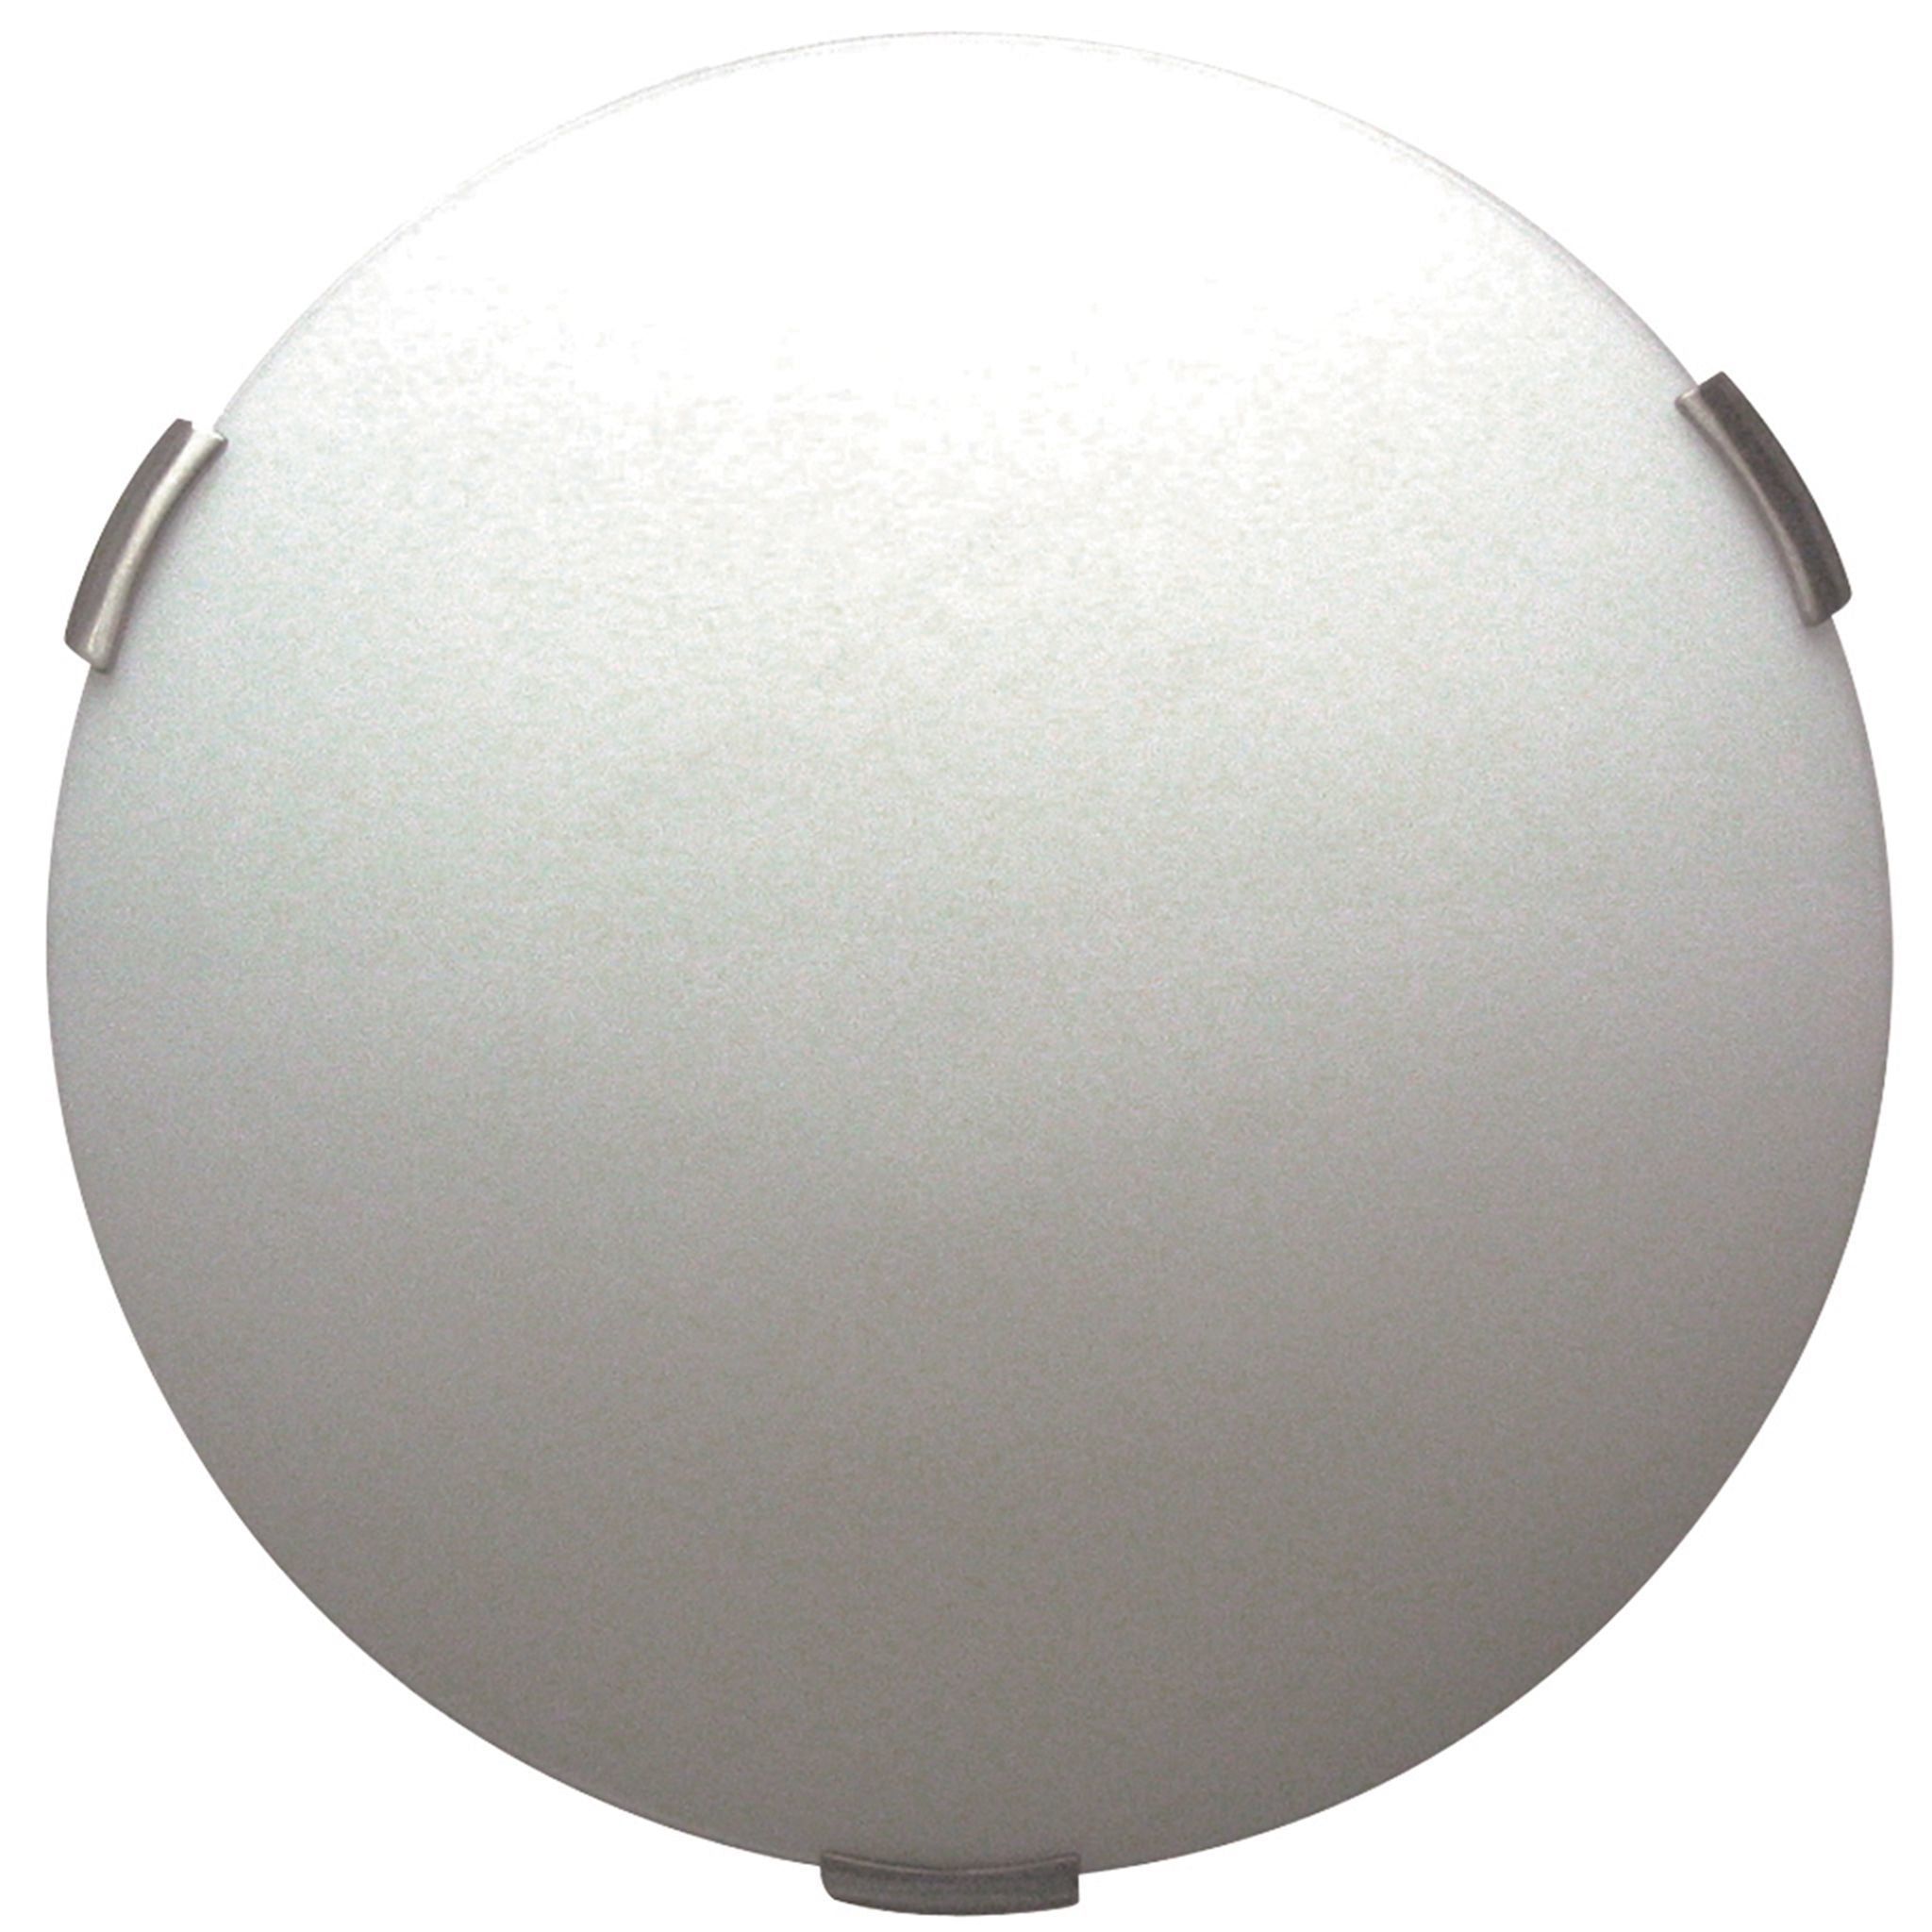 Orinoco Flush mount Stainless steel - DVP1432SN | DVI